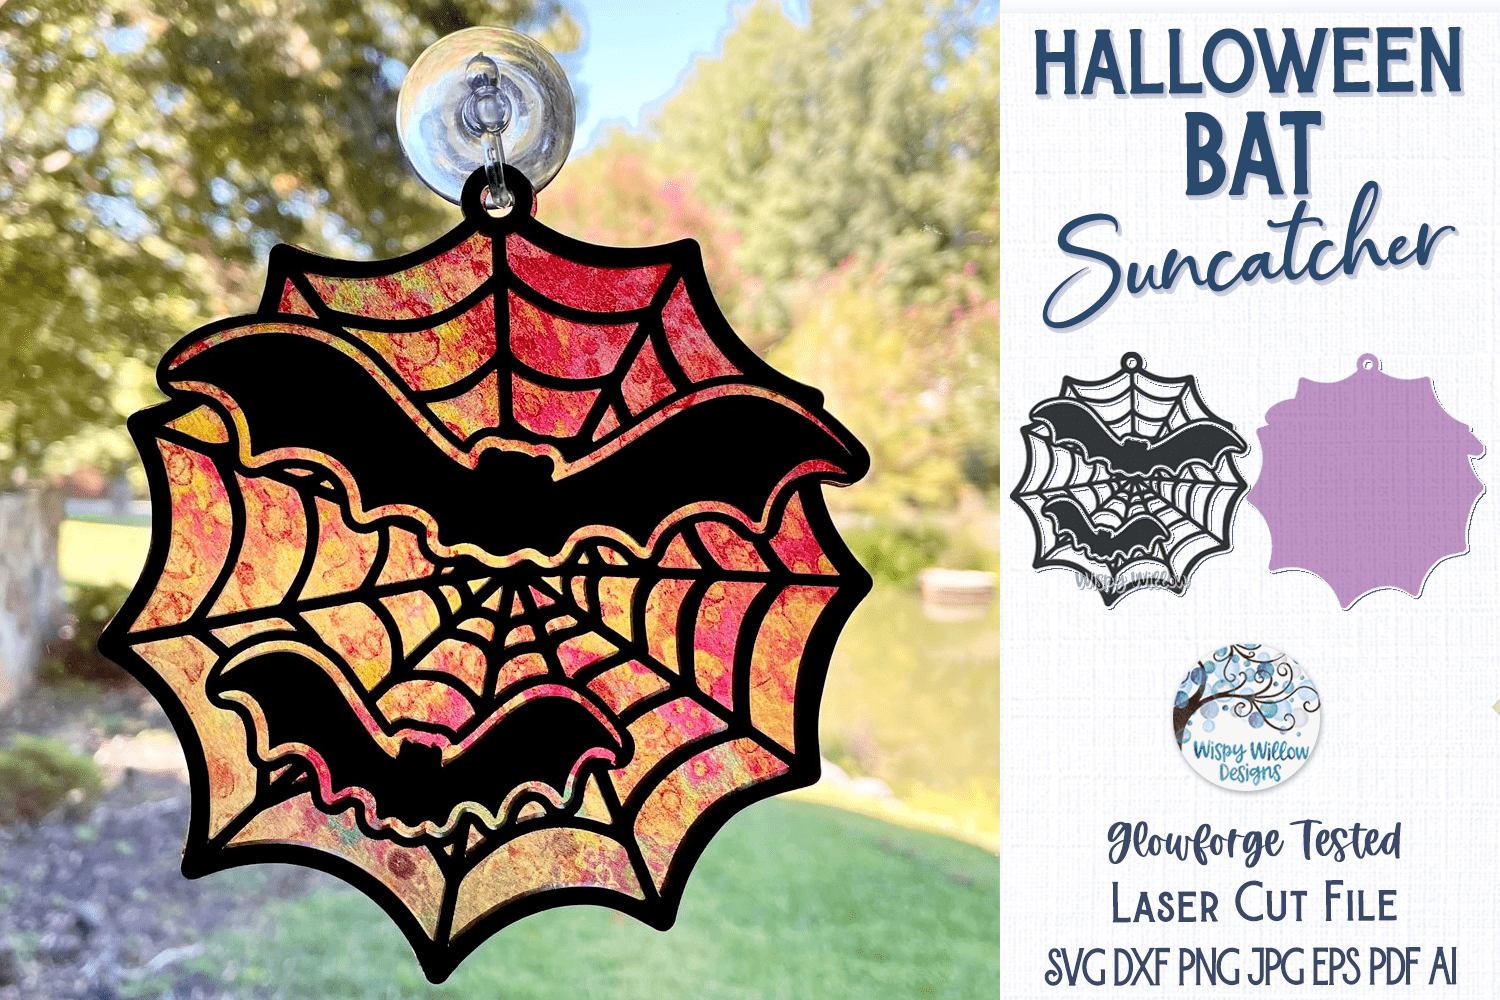 Halloween Bat Suncatcher for Glowforge Laser Cutter Wispy Willow Designs Company